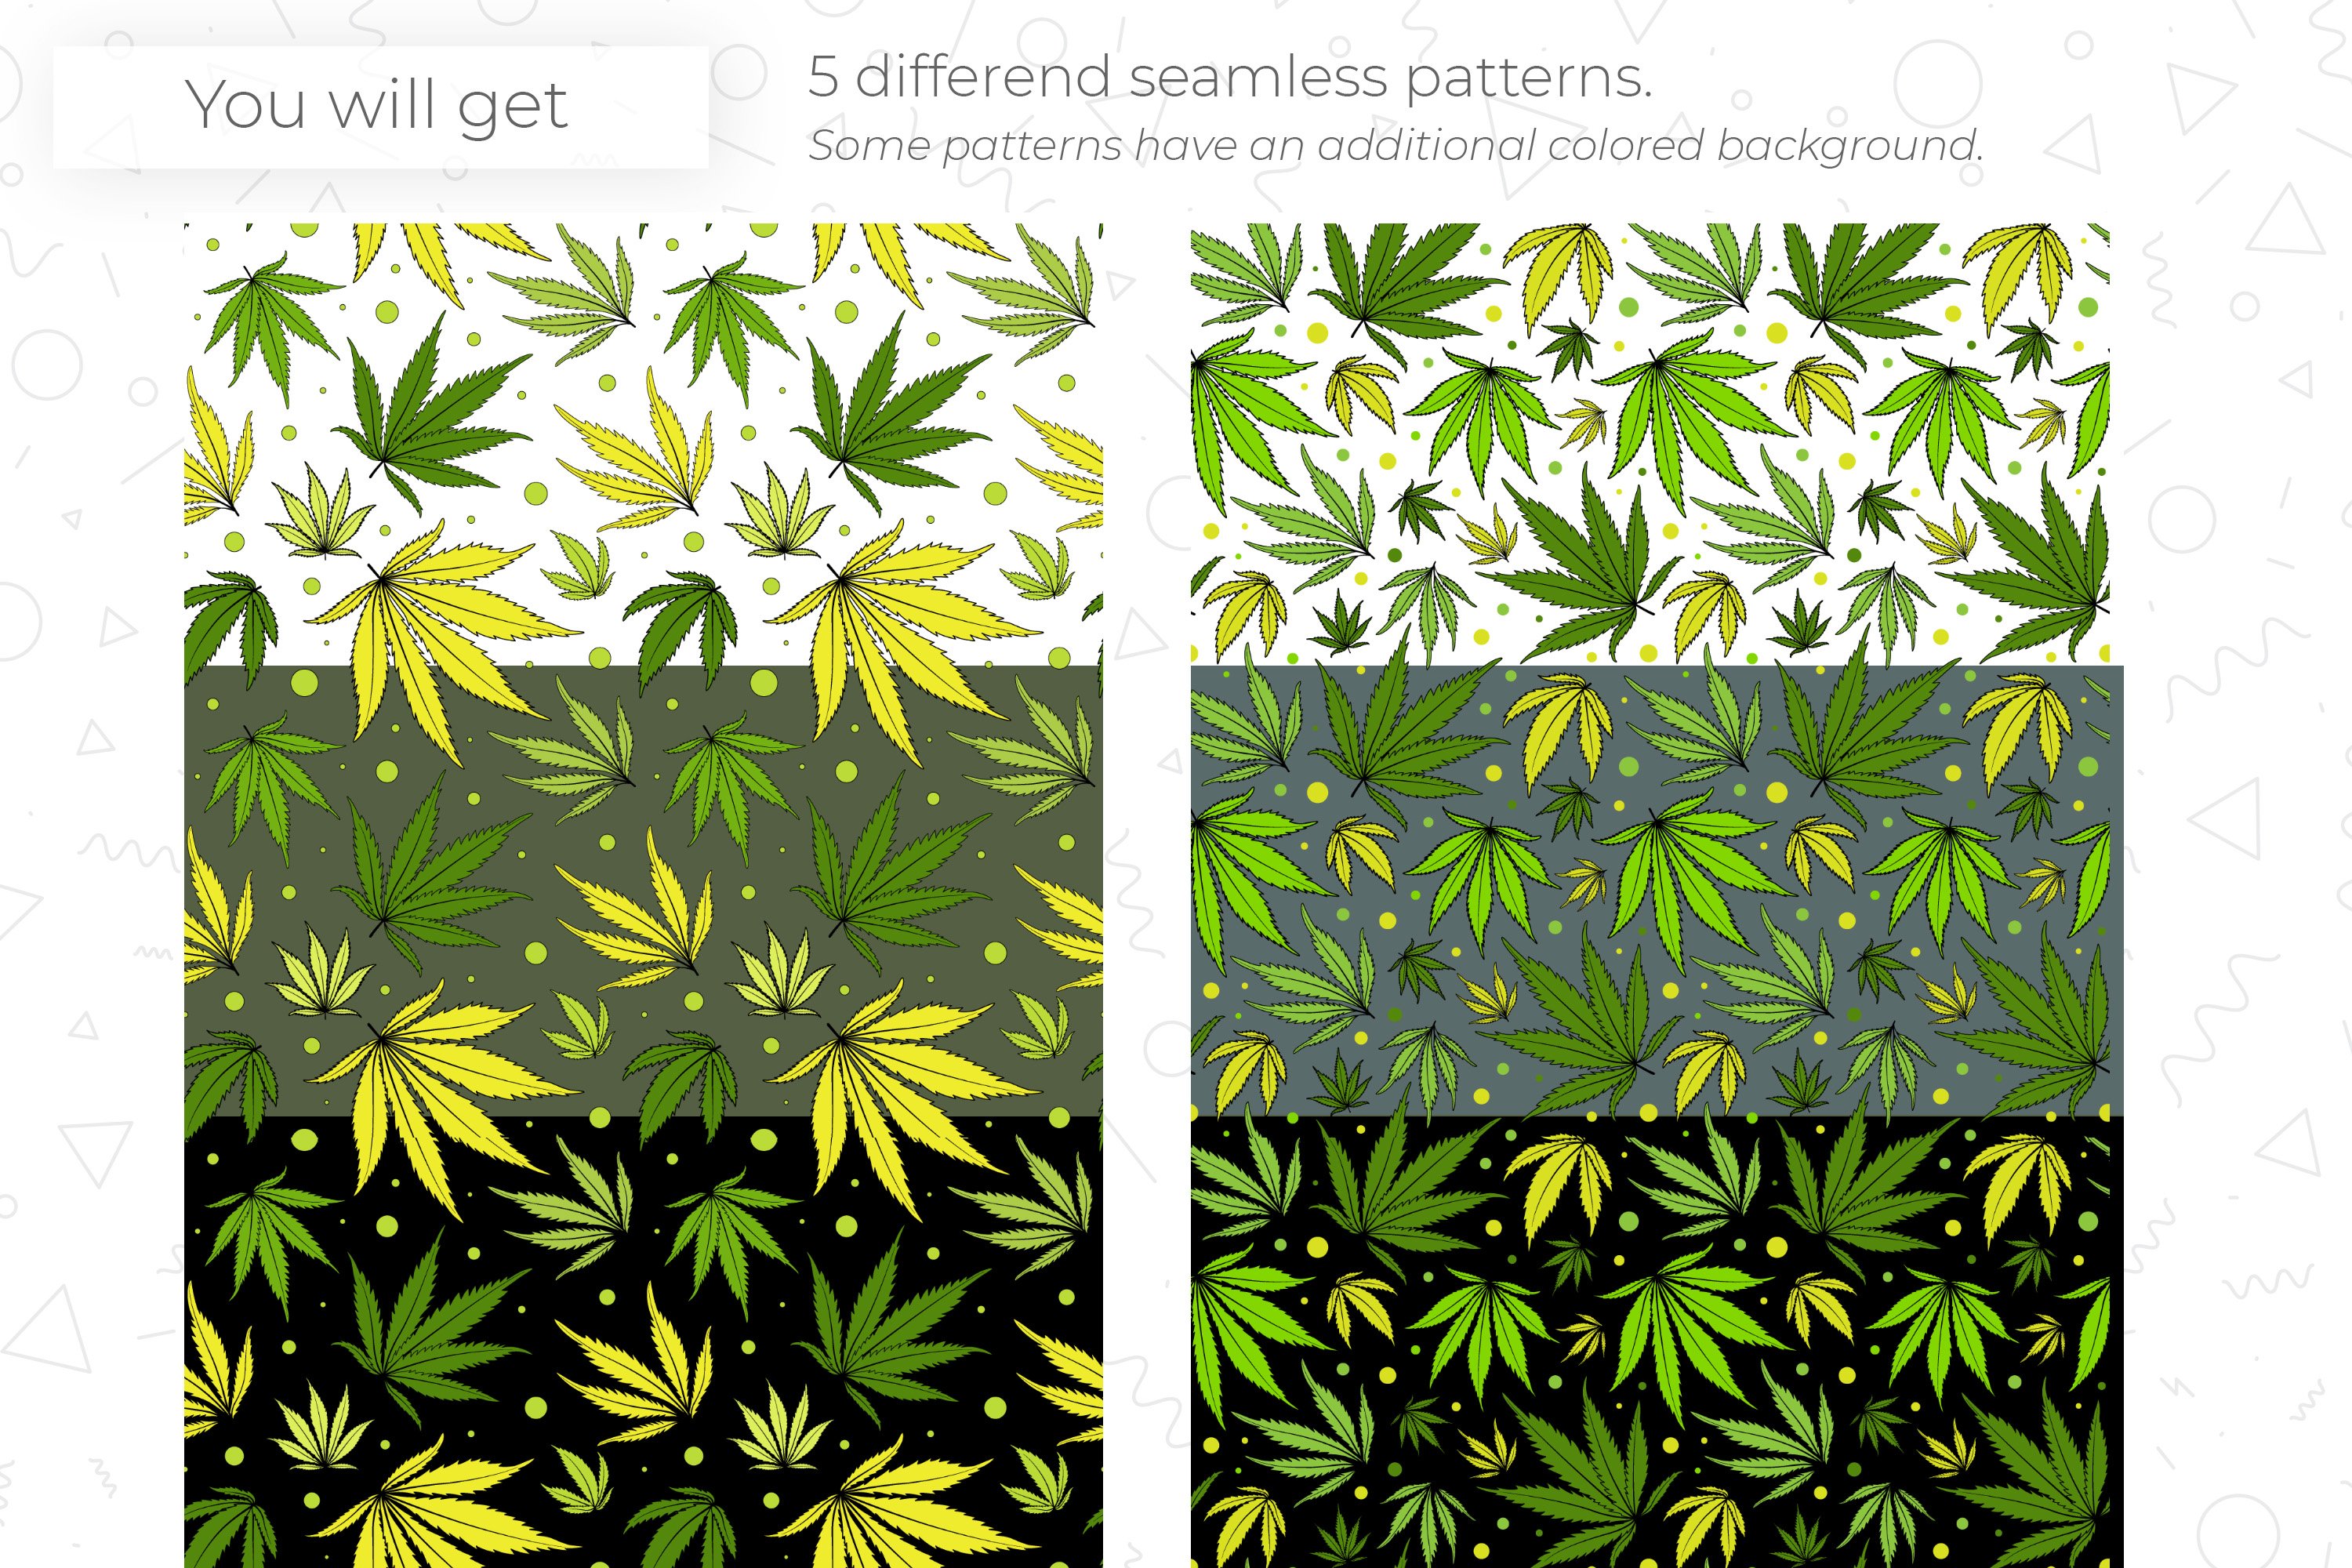 5 different seamless patterns.